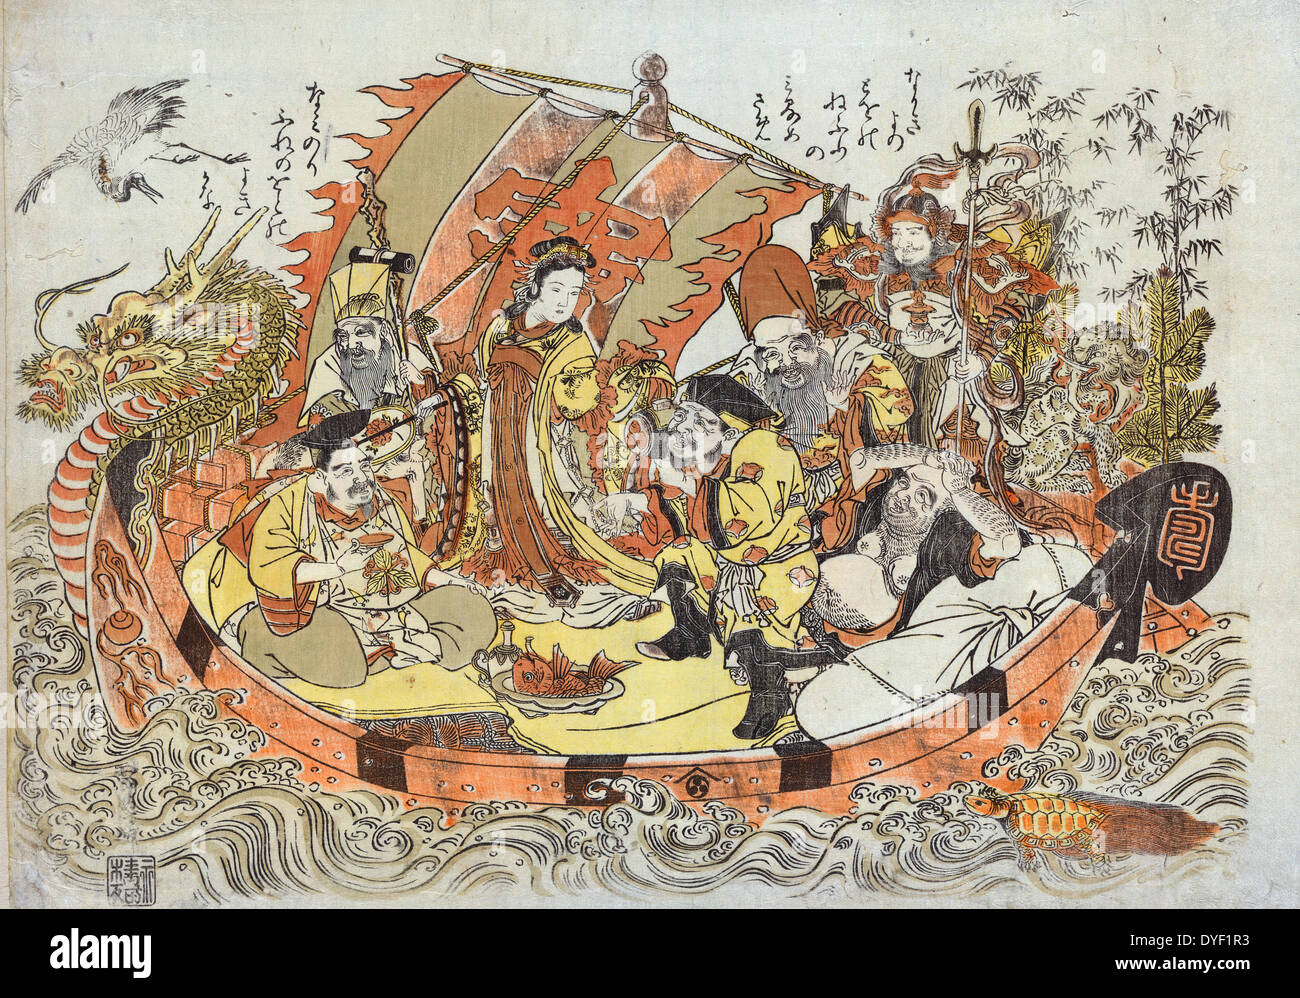 Shichifukujin takarabune (Seven gods of good fortune in the treasure boat). by Shigemasa Kitao, 1739-1820, Japanese artist. dated between 1772 and 1781. the seven Japanese gods of good fortune (Ebisu, Daikokuten, Bishamonten, Benzaiten, Fukurokuju, Hotei, and Jurojin) in a dragon-headed treasure boat, accompanied by a heron and a turtle. Stock Photo